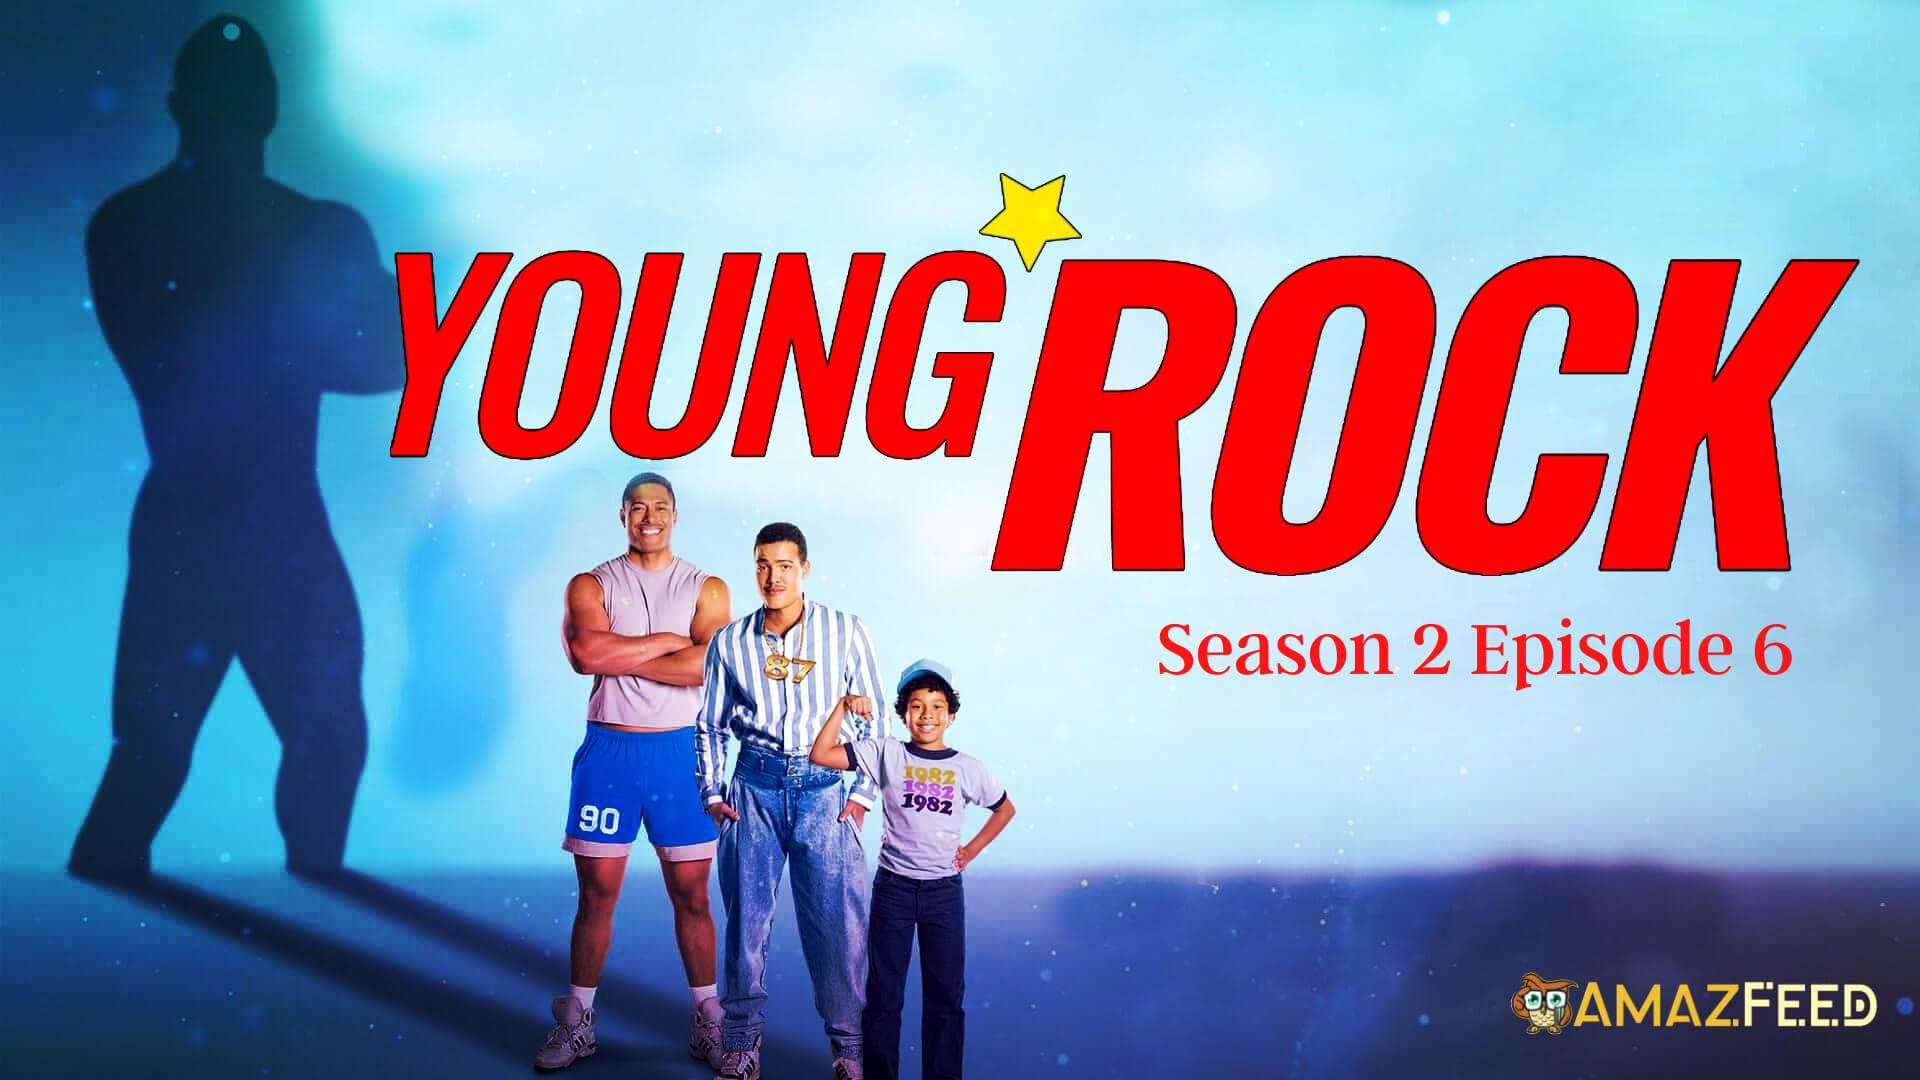 Young Rock Season 2 Episode 6 Release Date